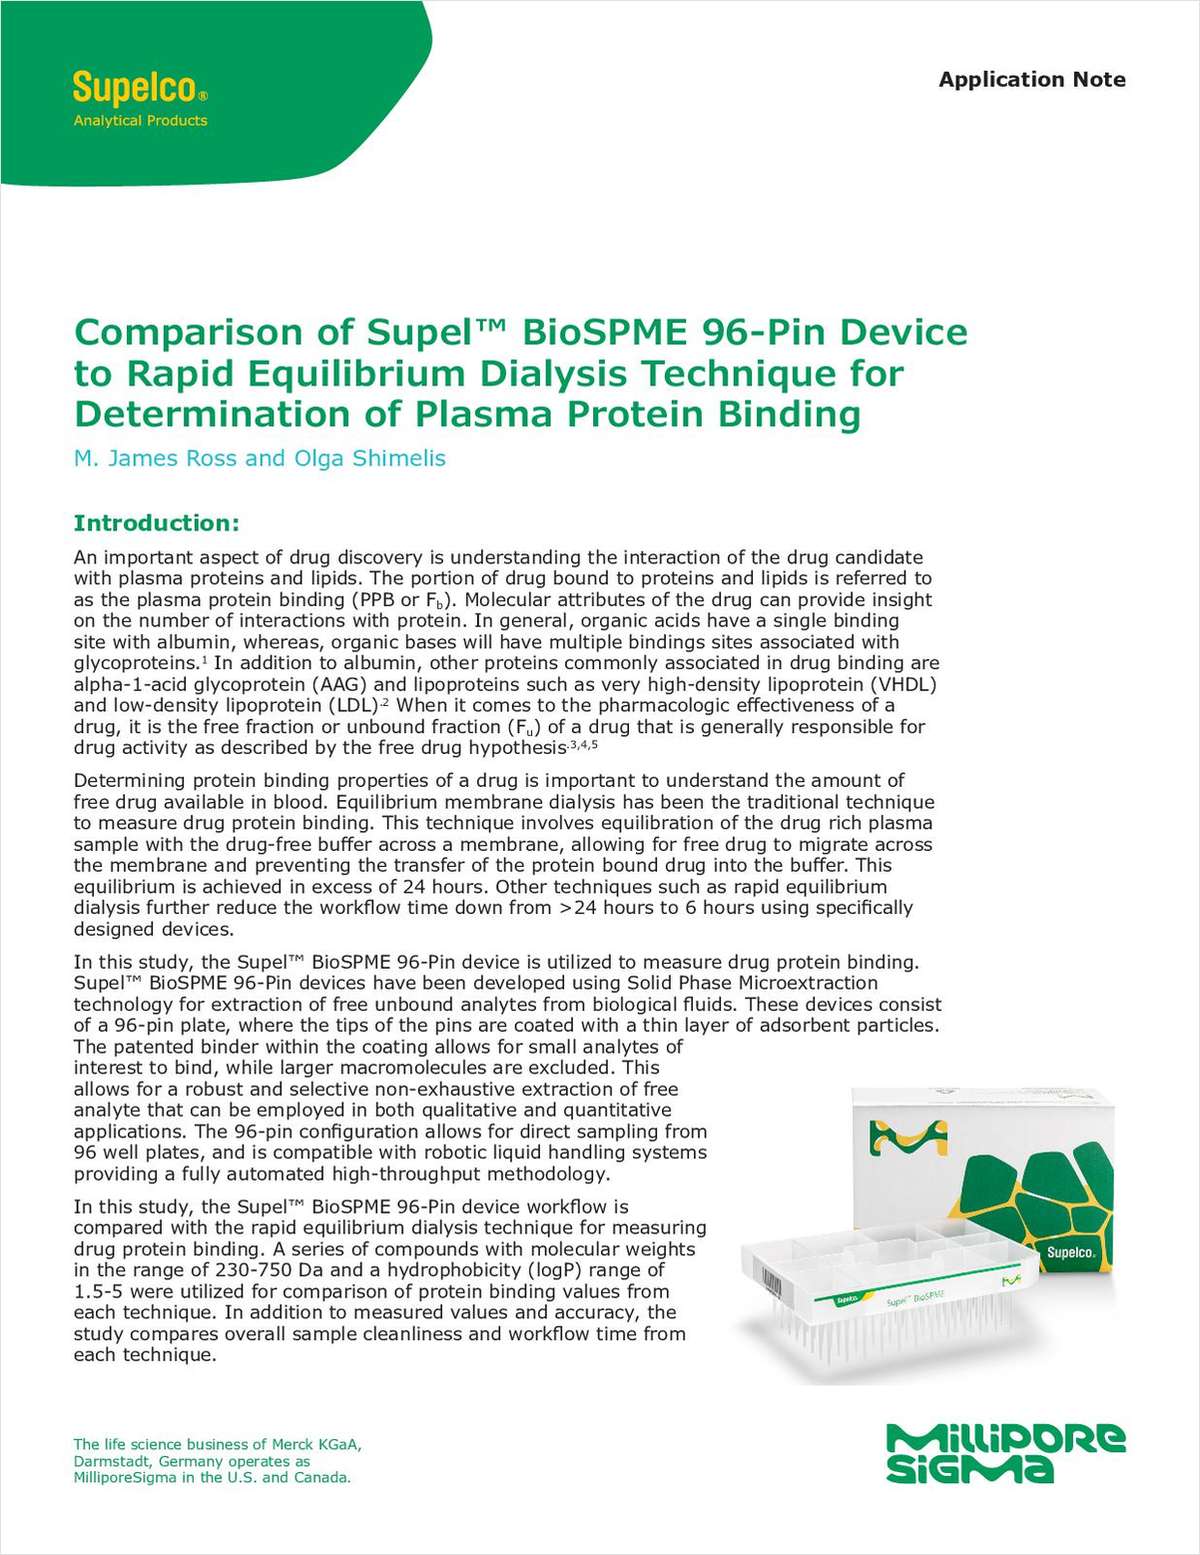 Comparison of Supel BioSPME 96-Pin Device to Rapid Equilibrium Dialysis Technique for Determination of Plasma Protein Binding